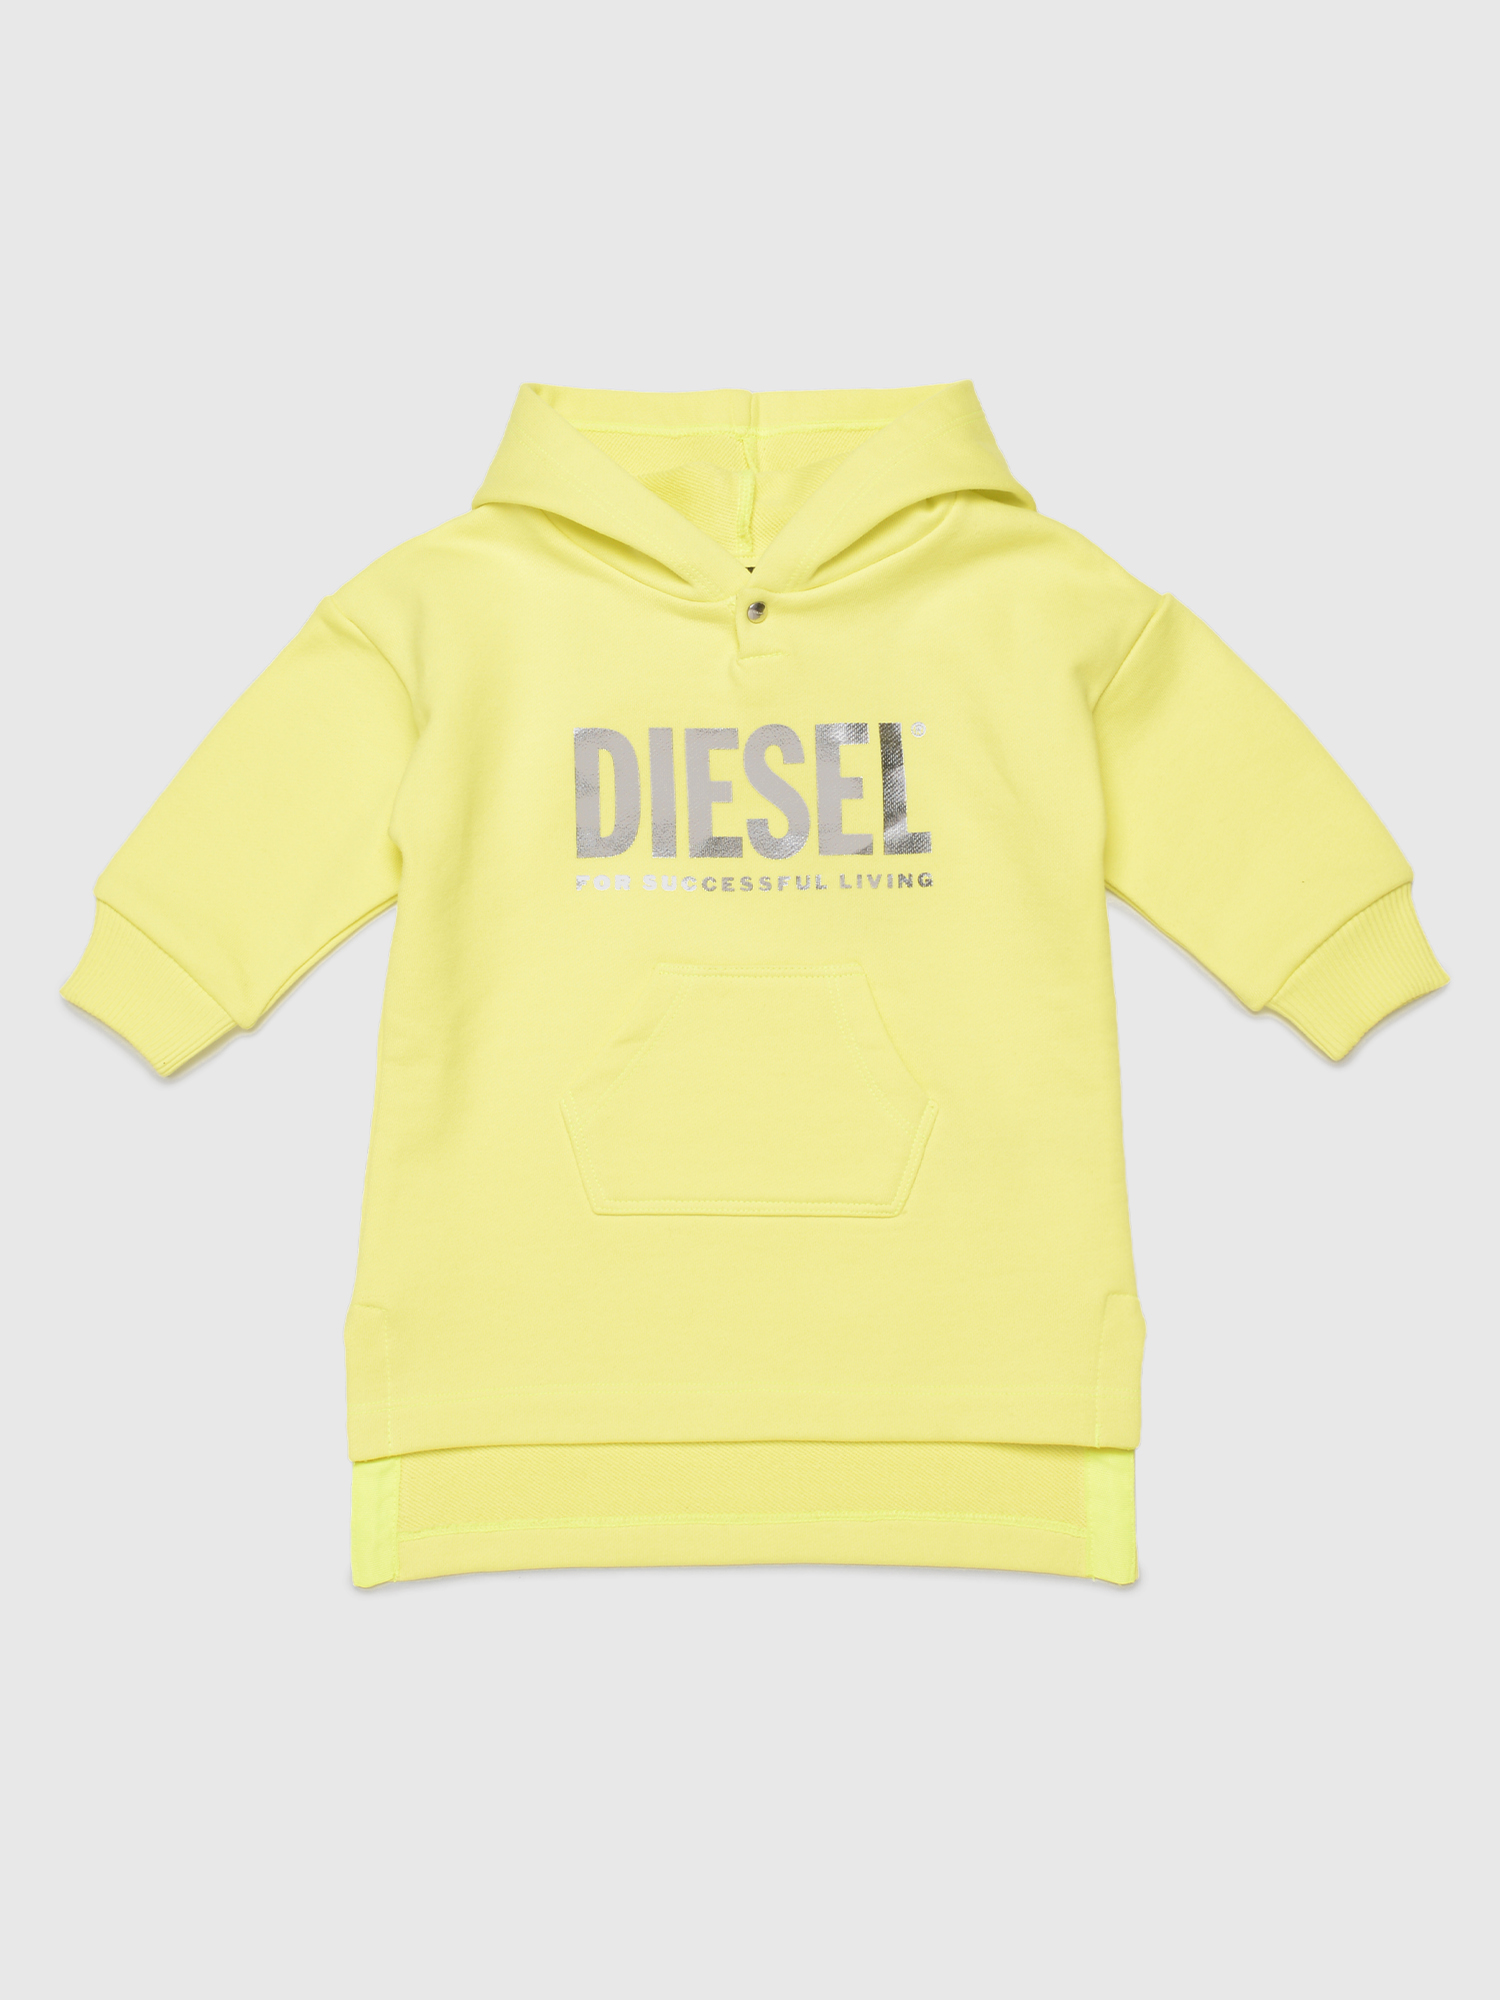 Diesel - DILSETB, Yellow - Image 1